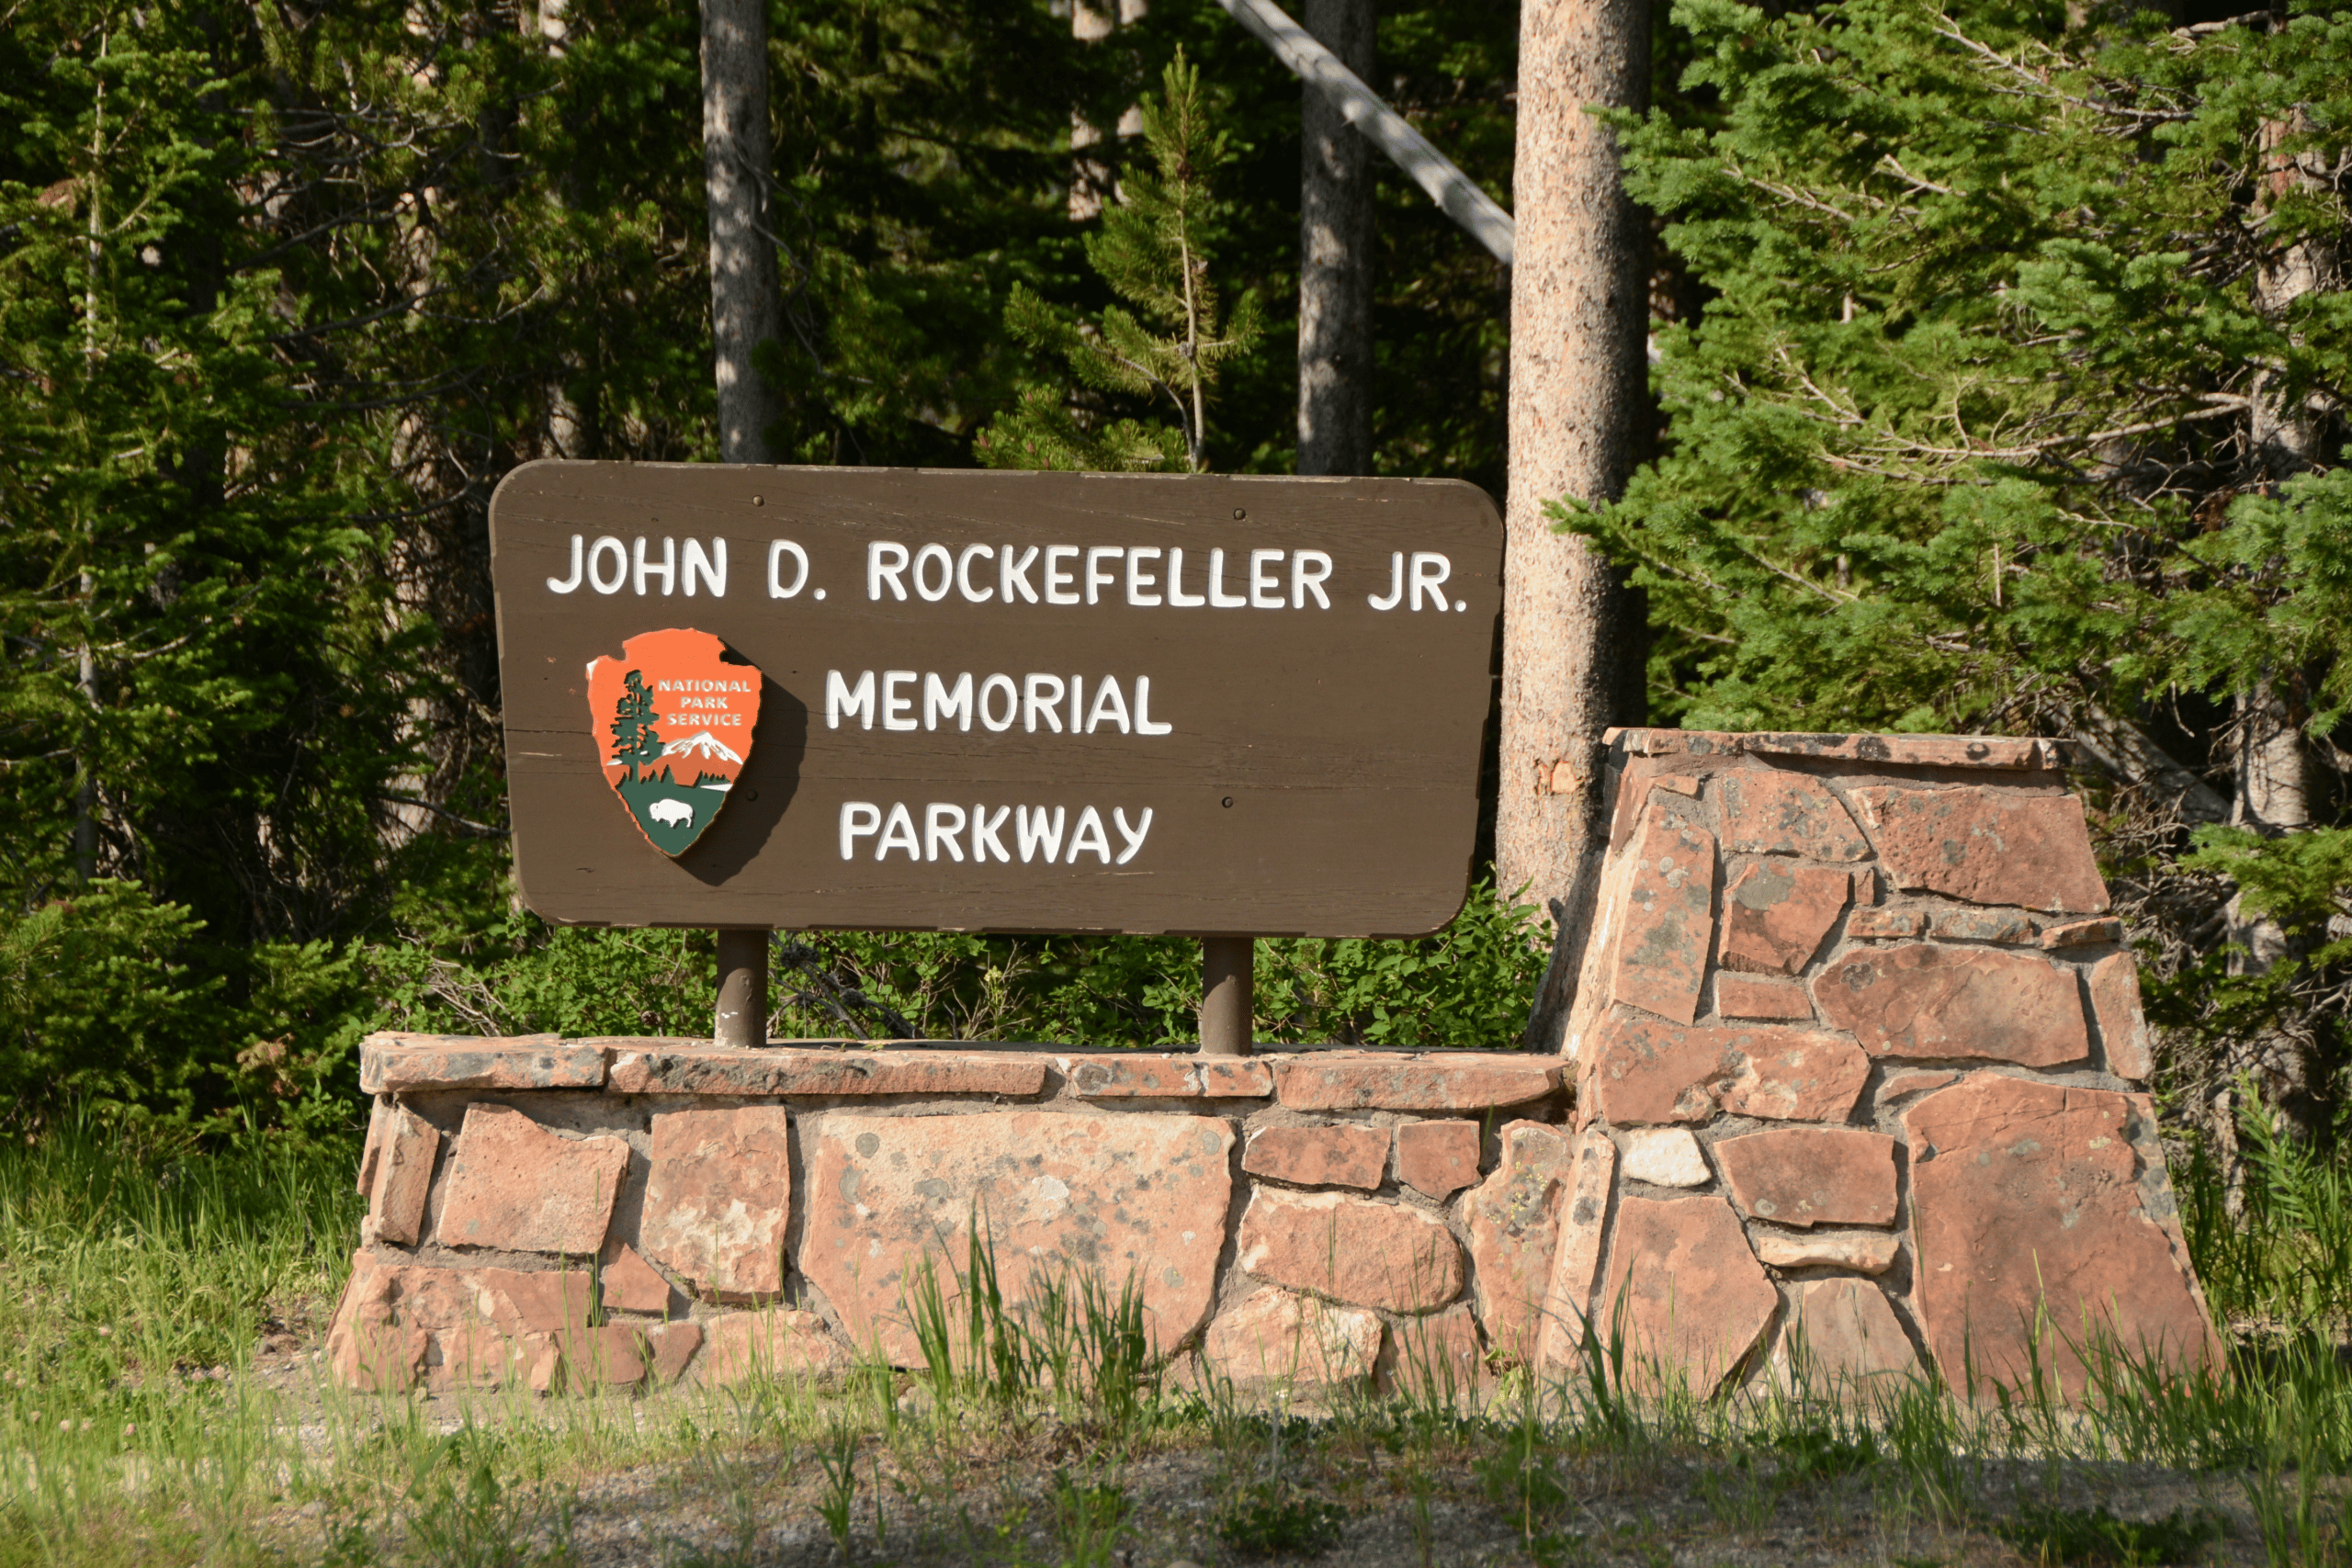 Entrance sign at the John D. Rockefeller Jr. Memorial Parkway